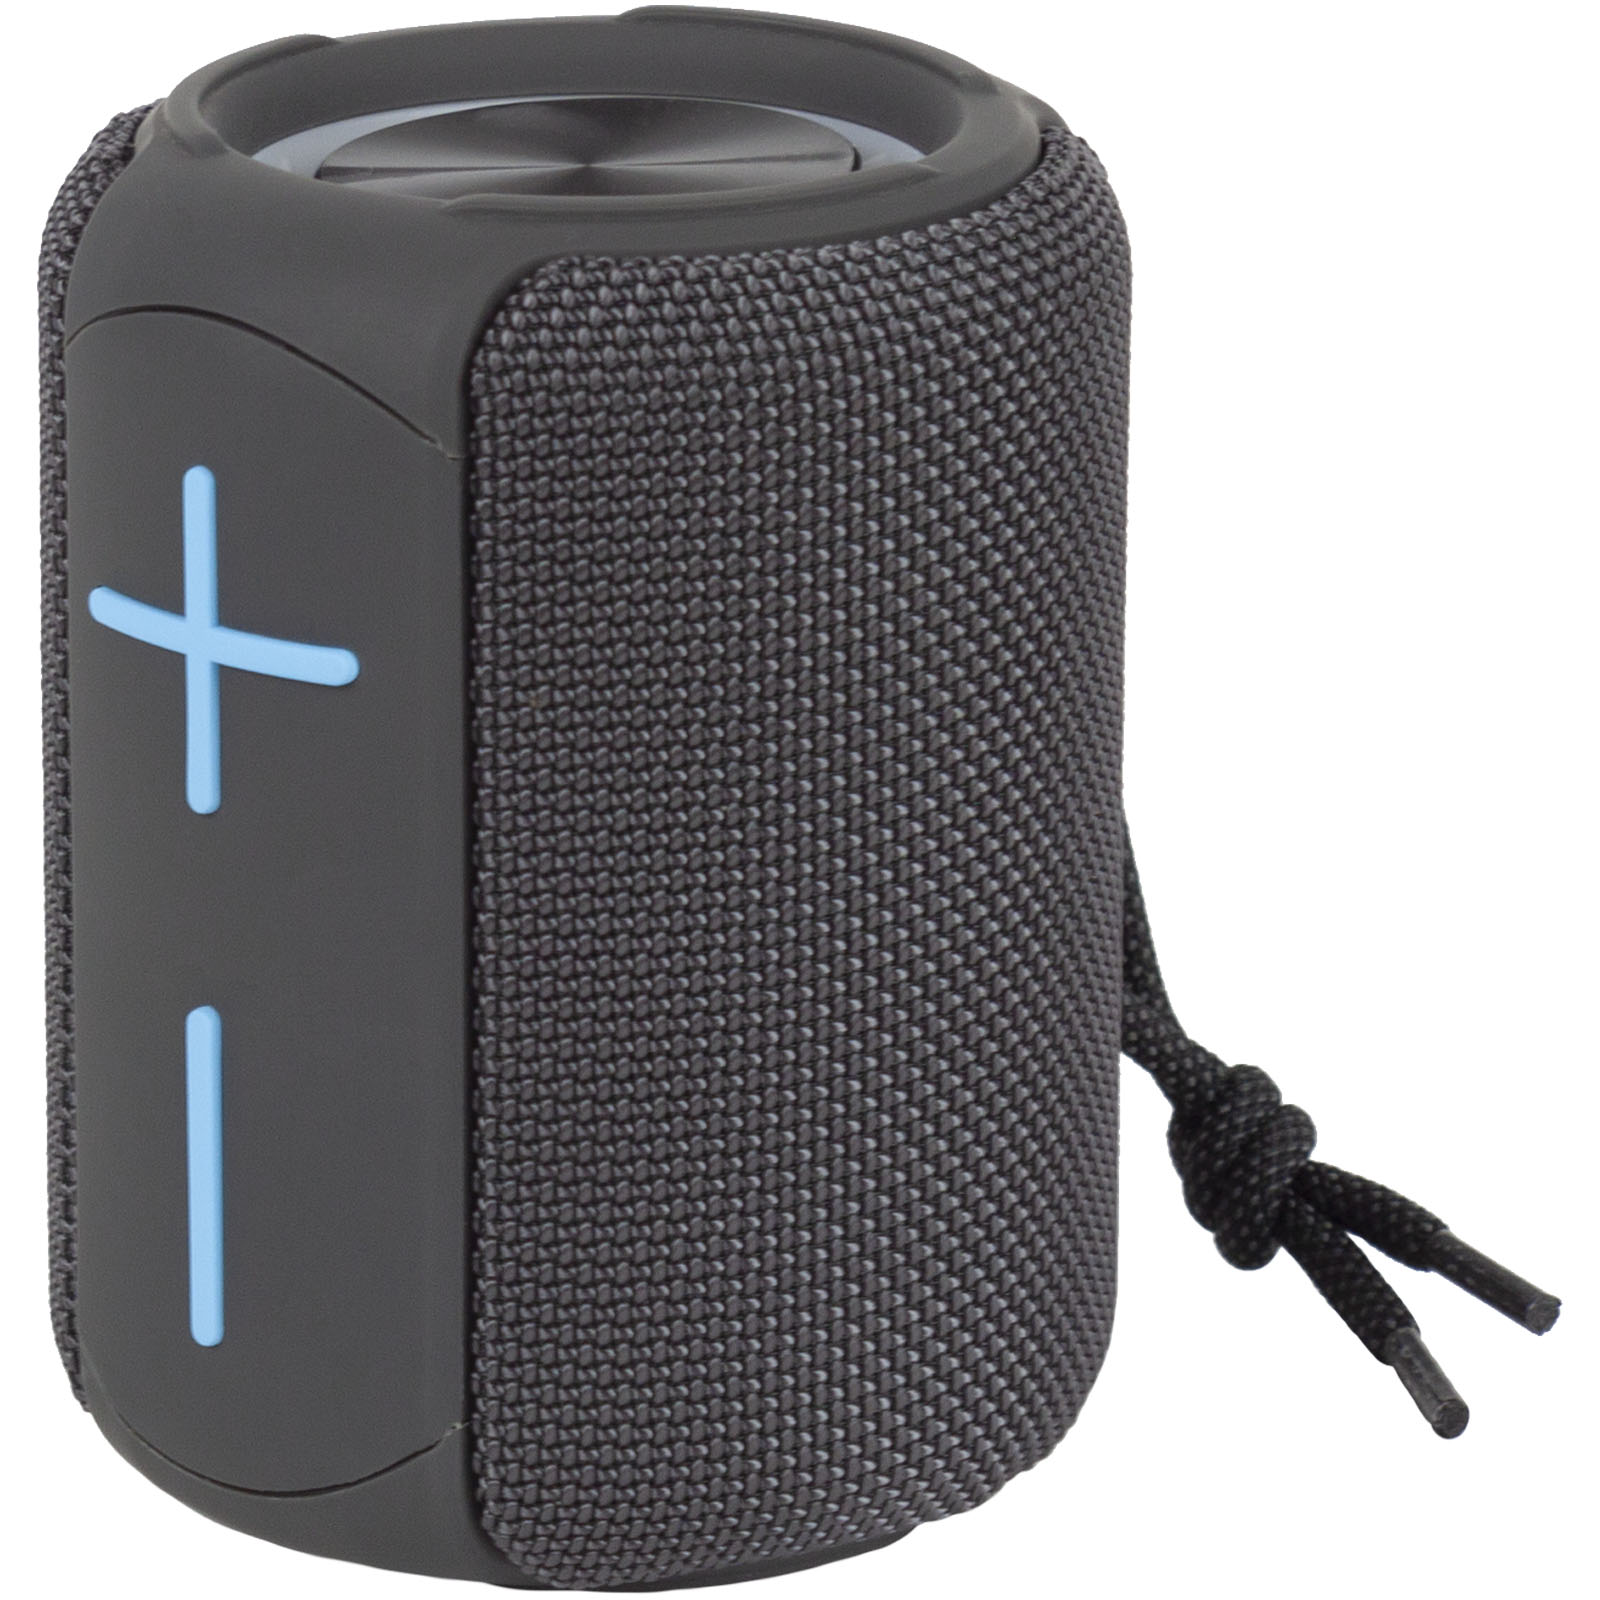 Haut-parleur Bluetooth BeatBox 6W - Voegtlinshoffen - Zaprinta France